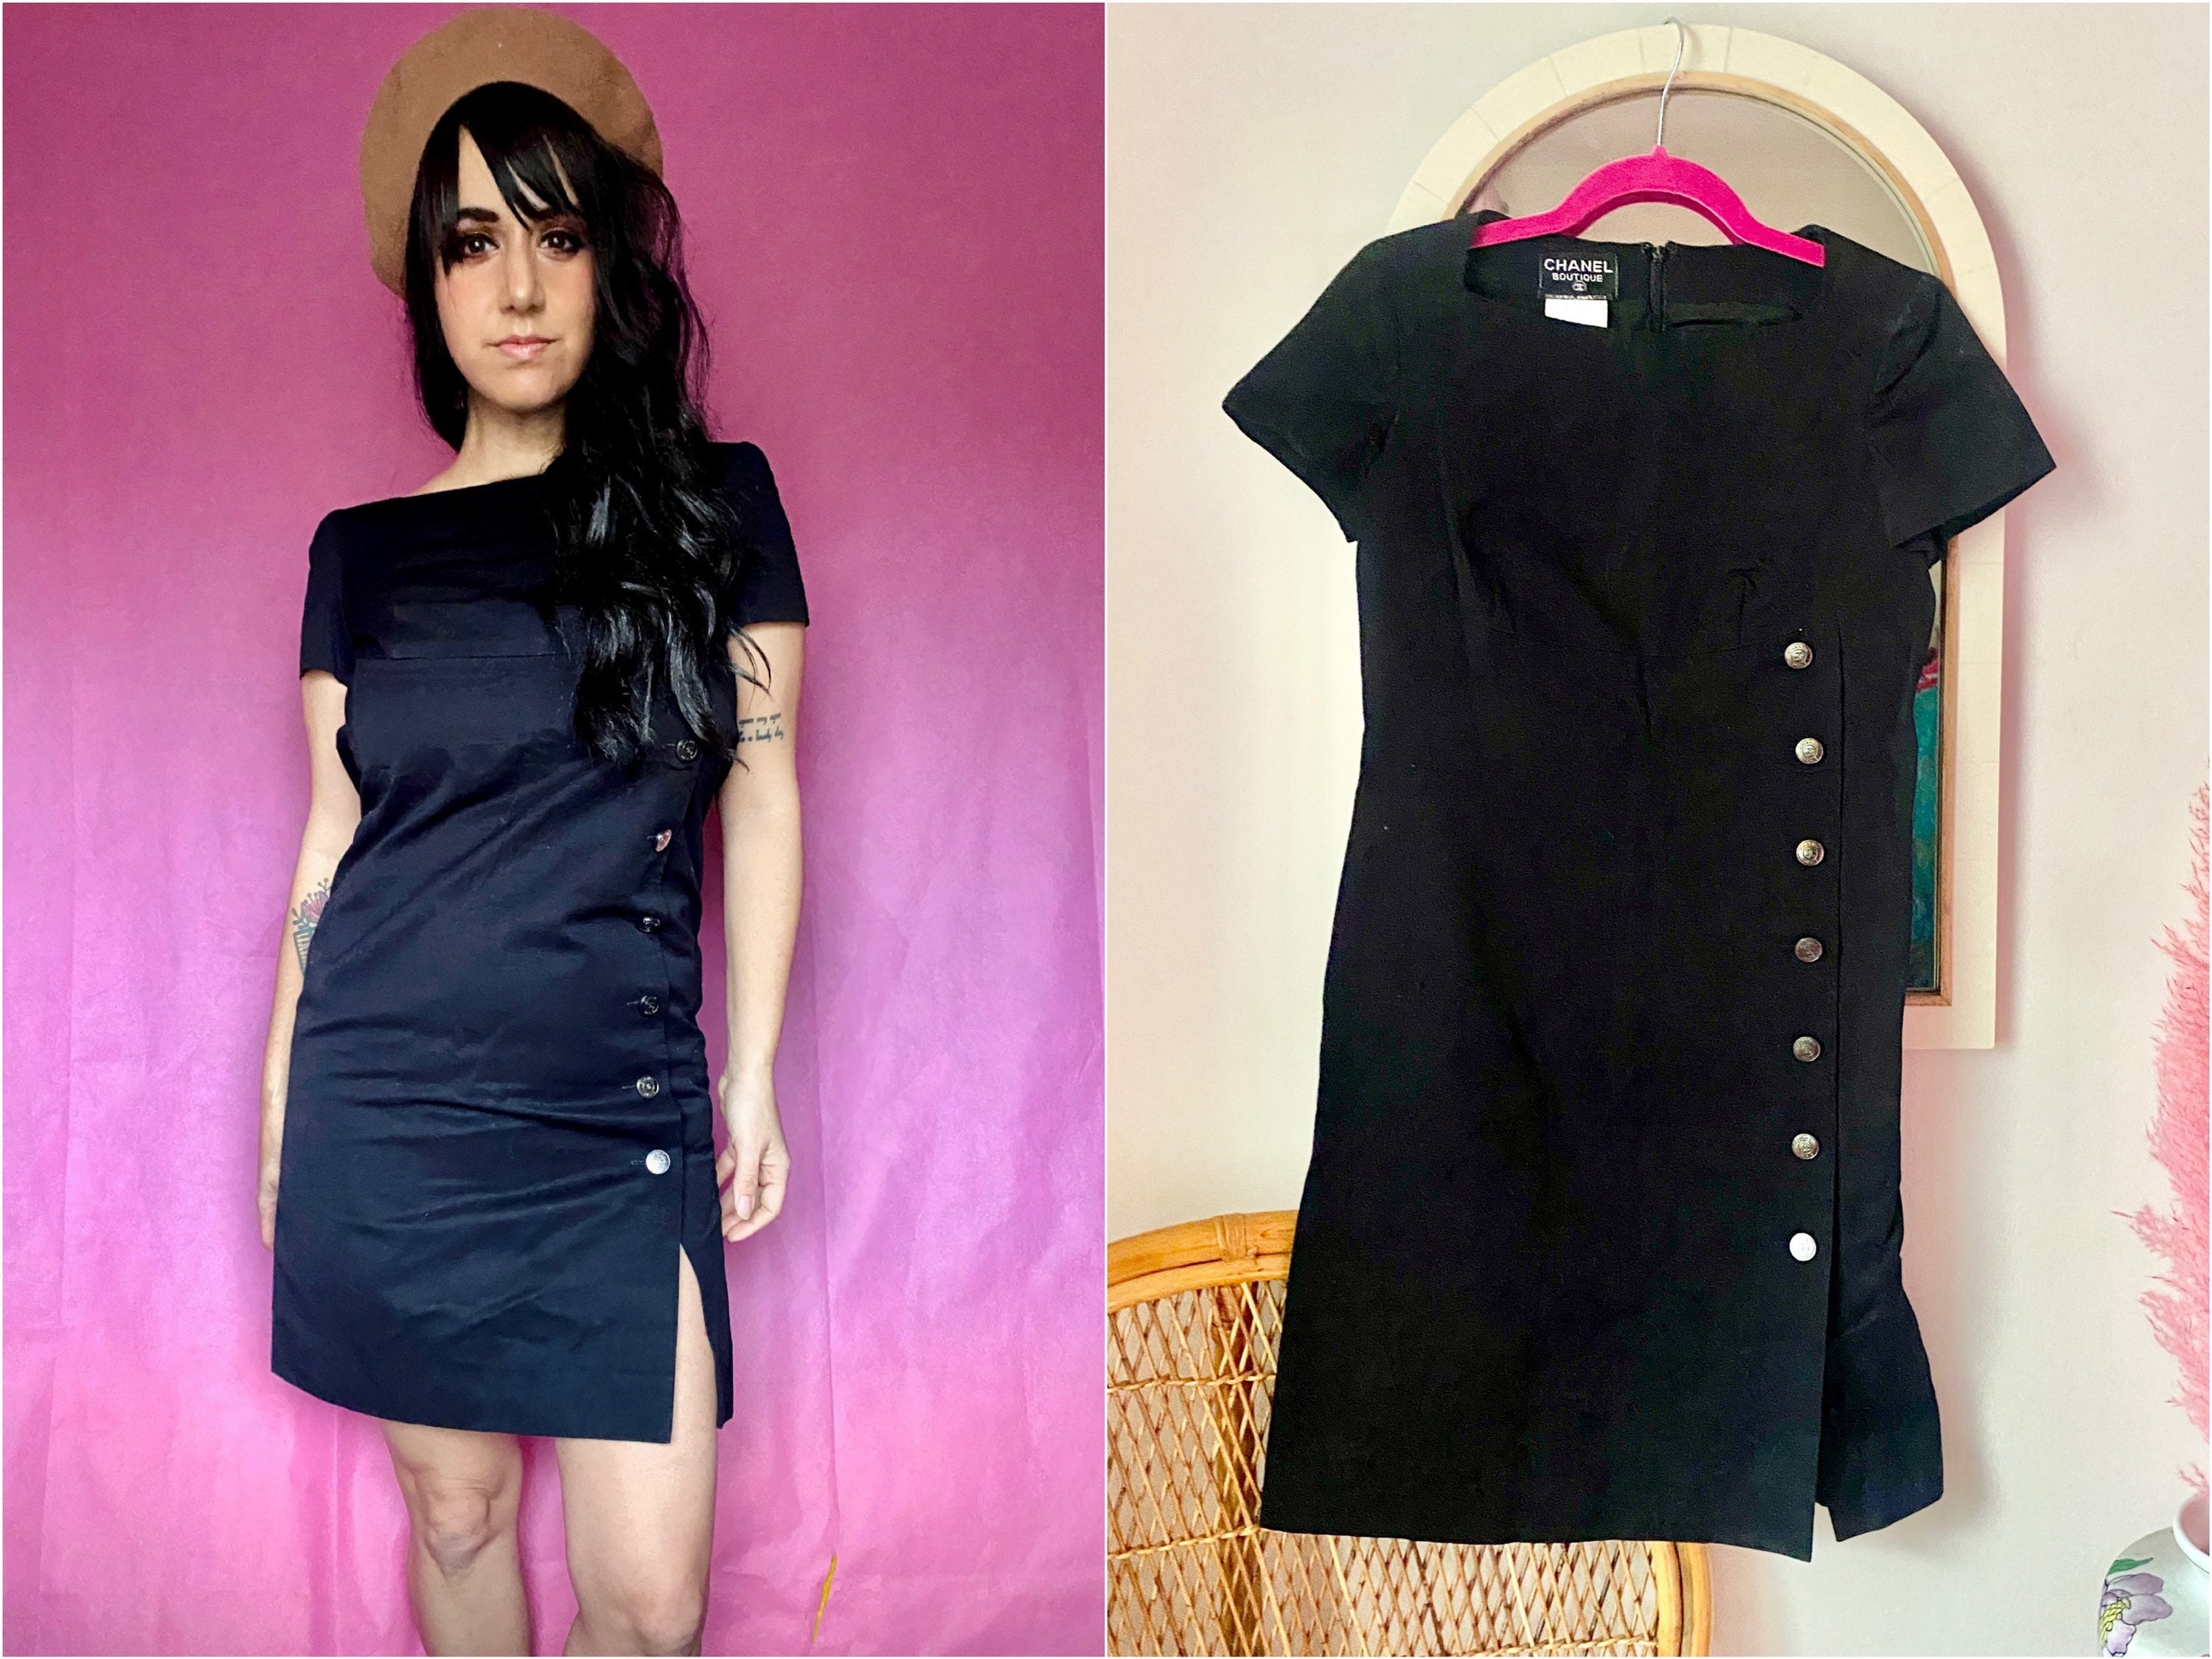 Chanel Boutique LBD / Cruise 97 Black Mini Sheath Dress / 